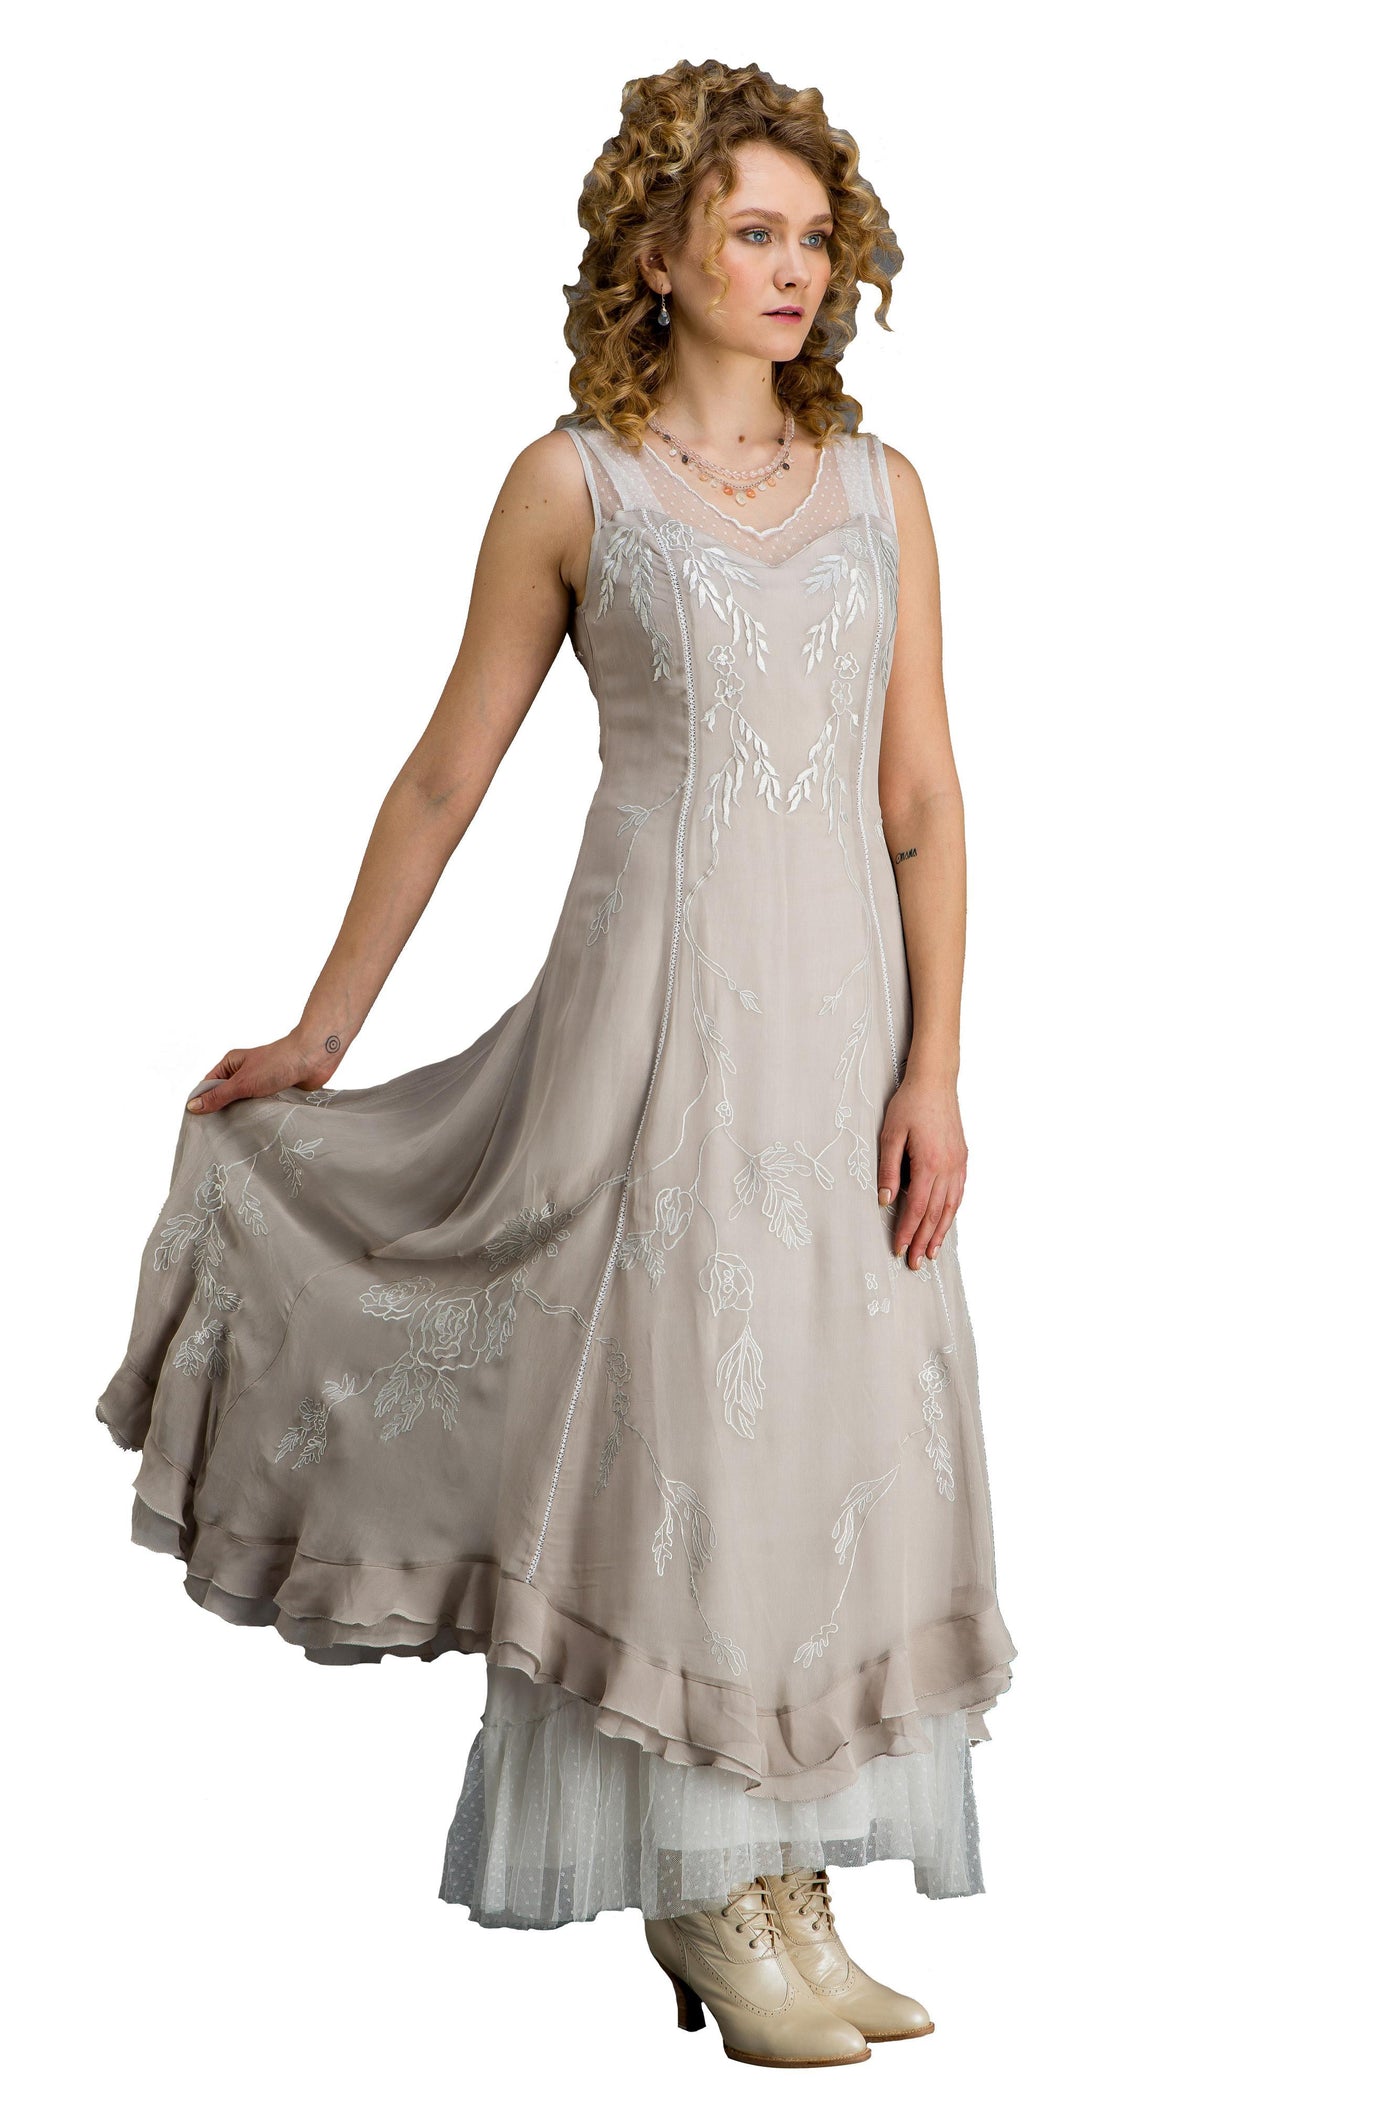 Victorian Wedding Dress in Silver-Grey